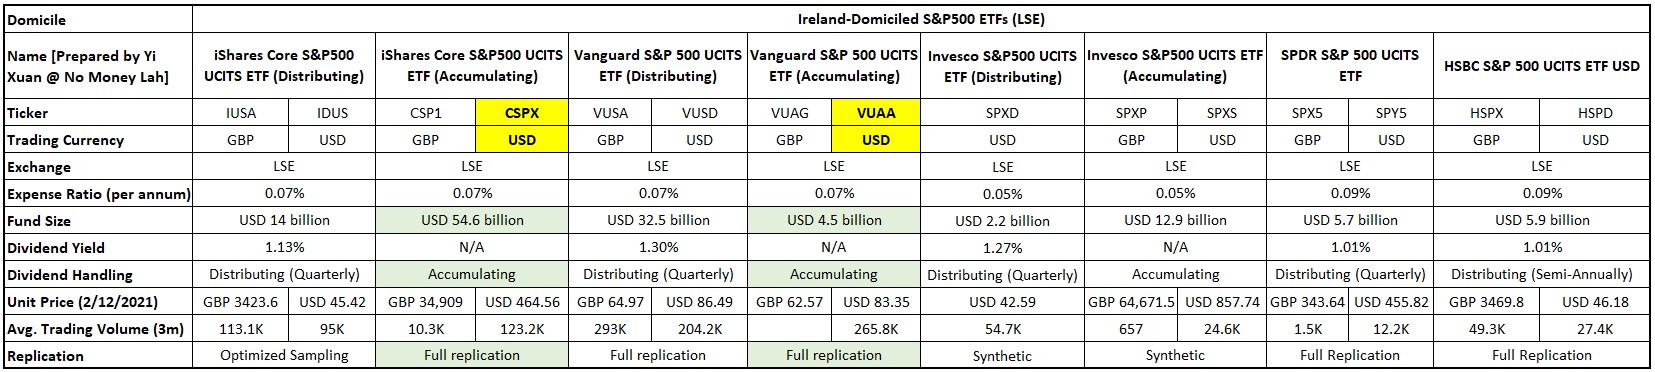 The best Ireland-Domiciled S&P500 ETFs 